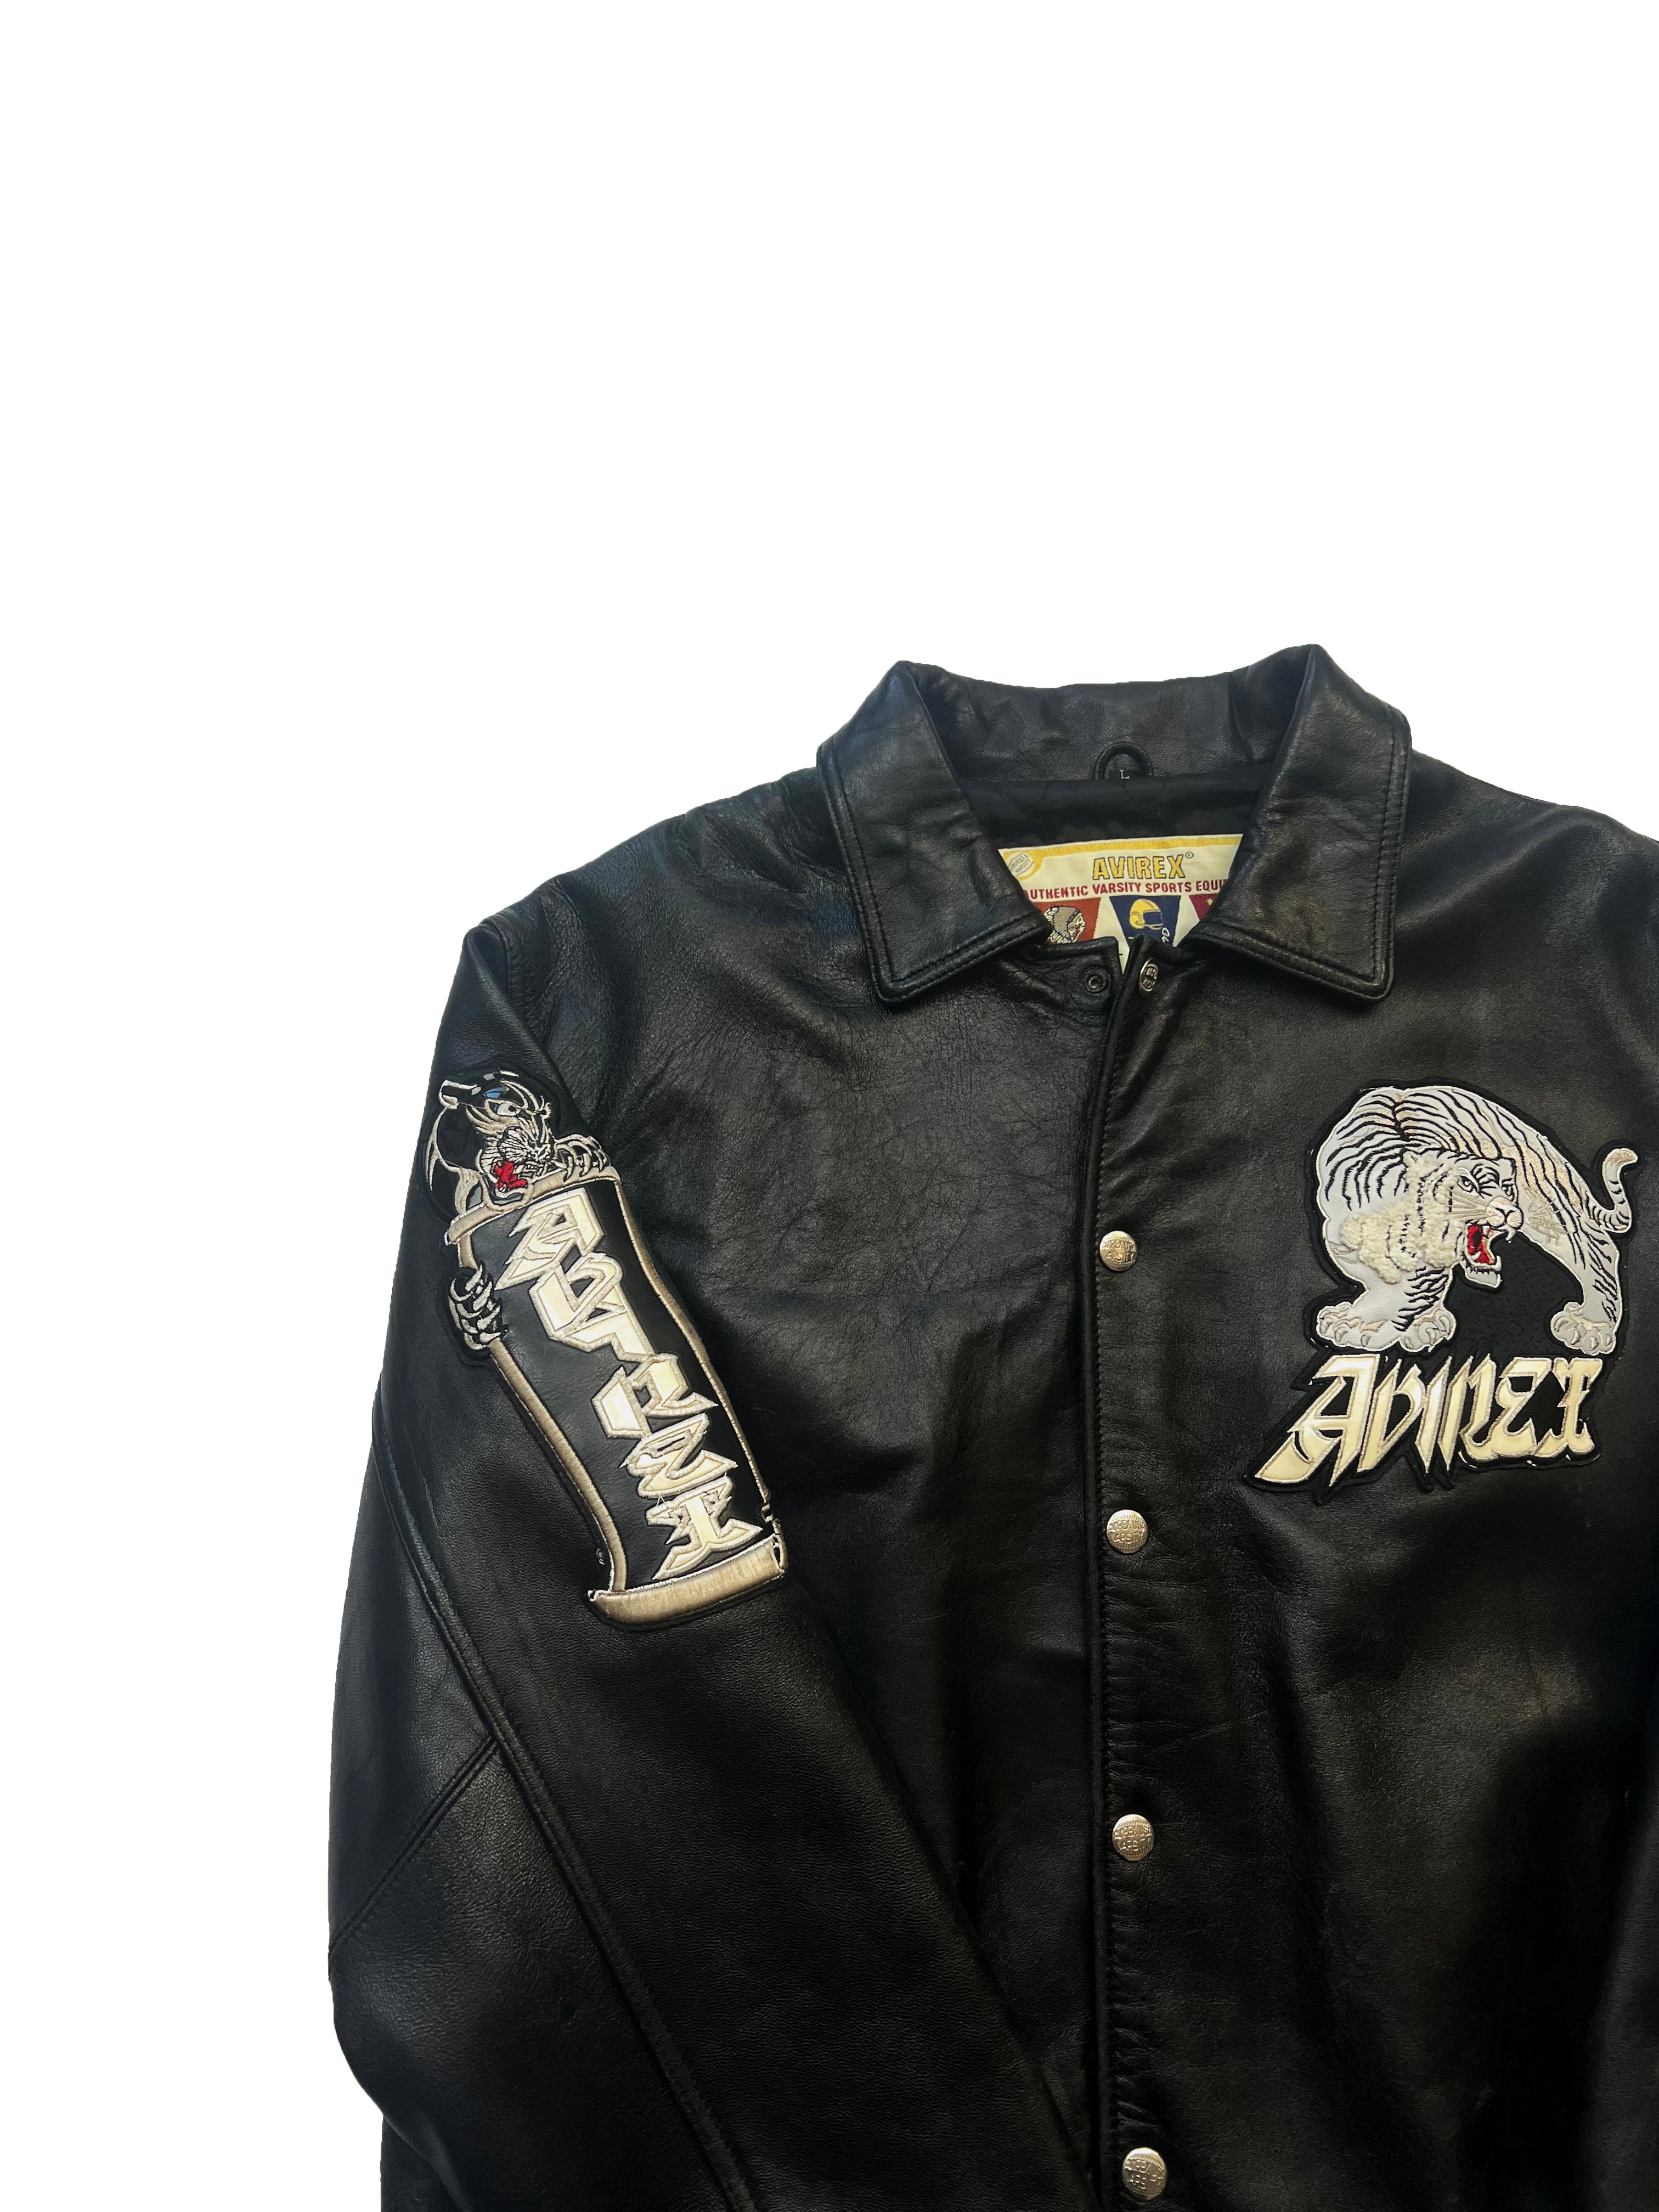 Avirex 'Speed Tiger' Black Leather Jacket 90's